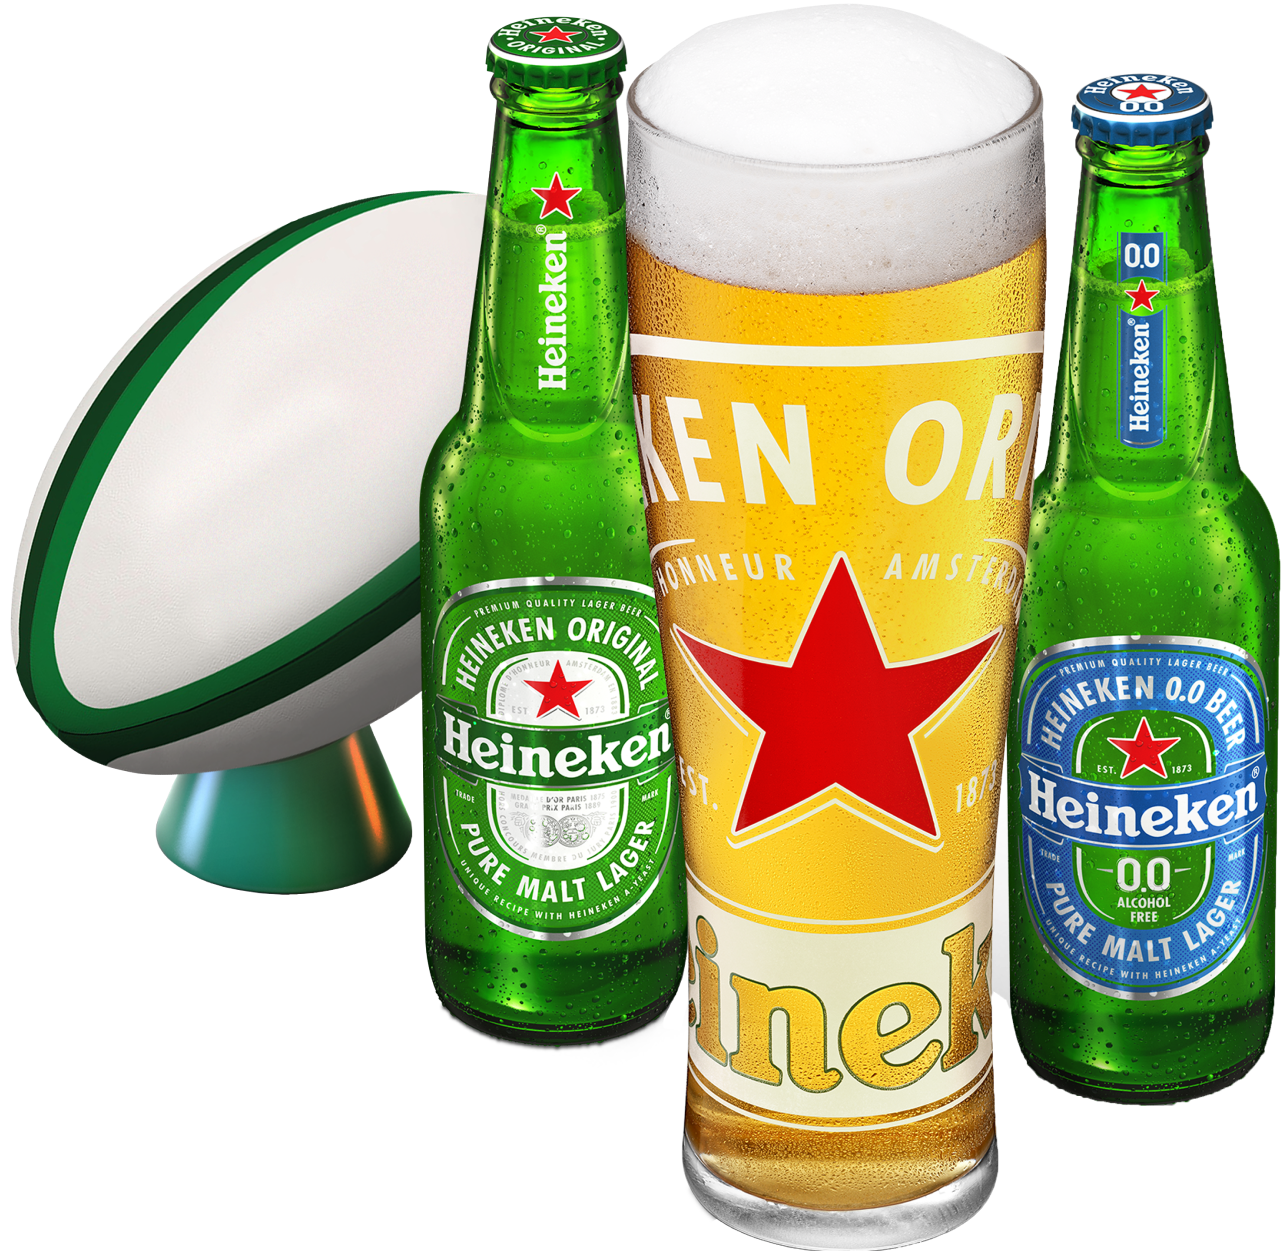 Heineken 150 years